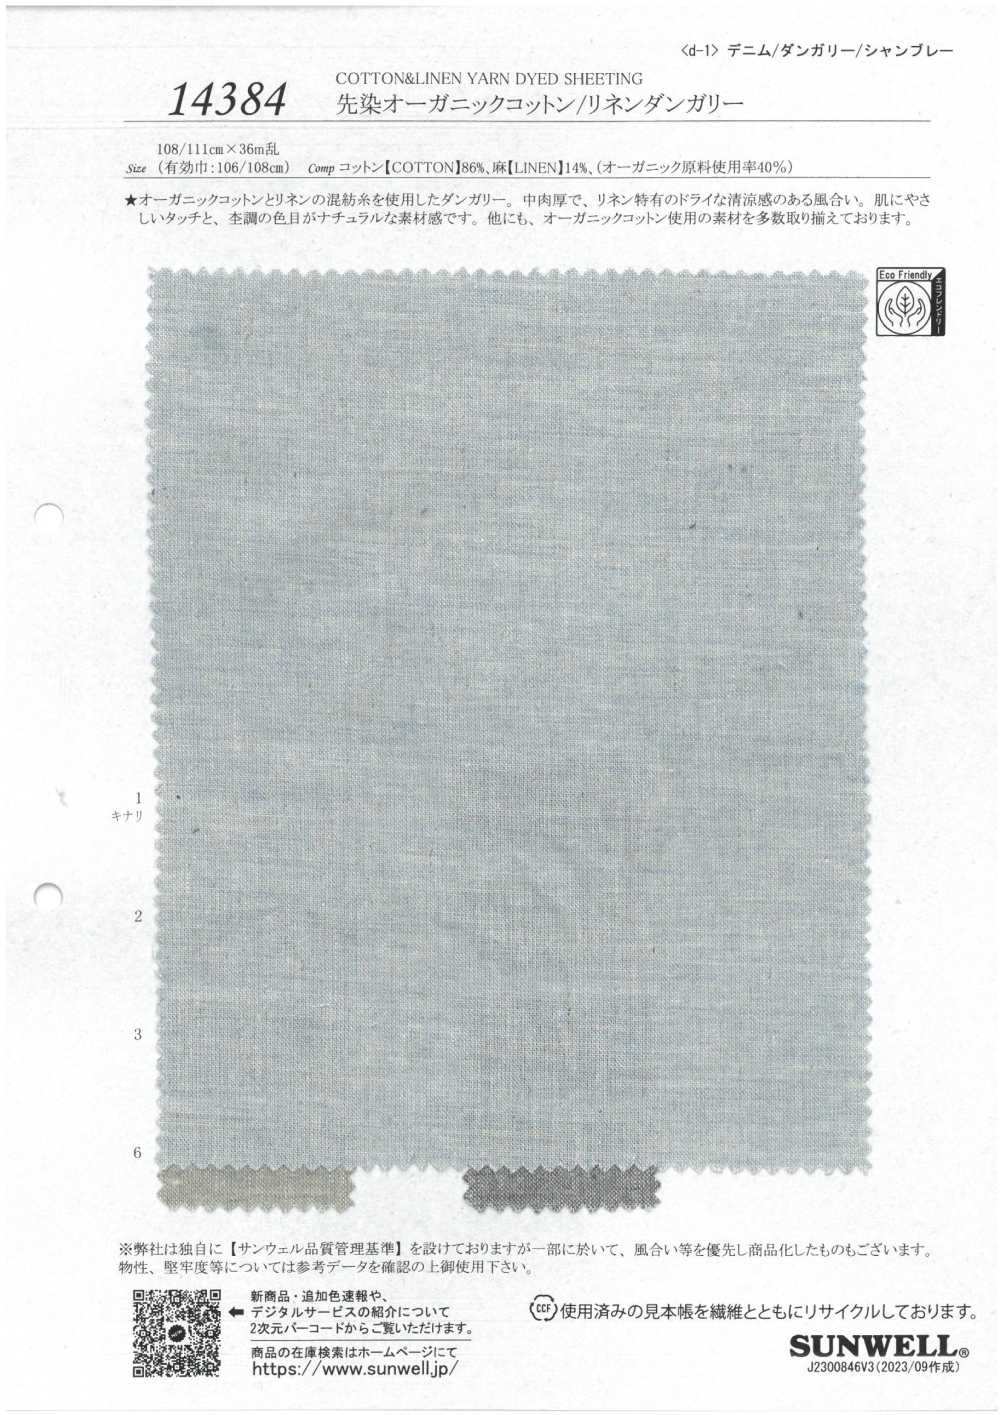 14384 Peto De Lino/algodón Orgánico Teñido En Hilo[Fabrica Textil] SUNWELL